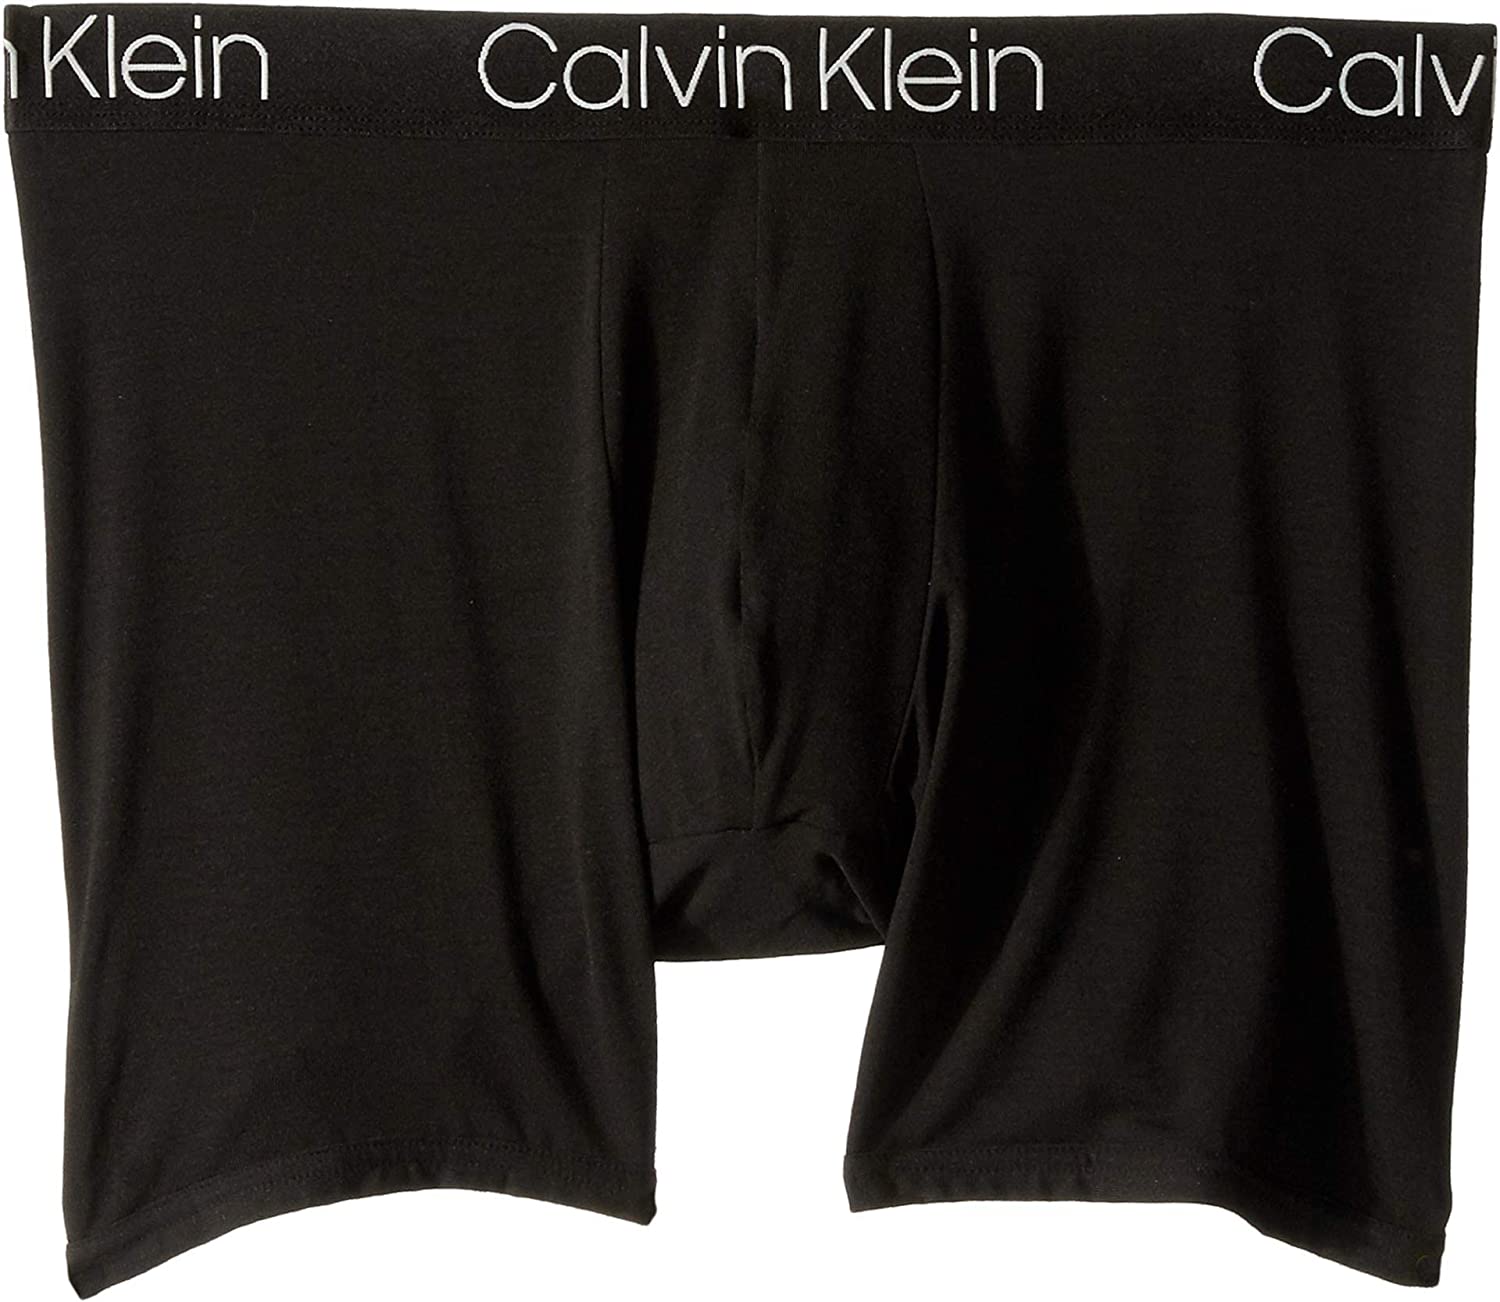 Calvin Klein Men's Ultra Soft Modal Boxer Briefs Black $11.03 FS with Amazon Prime